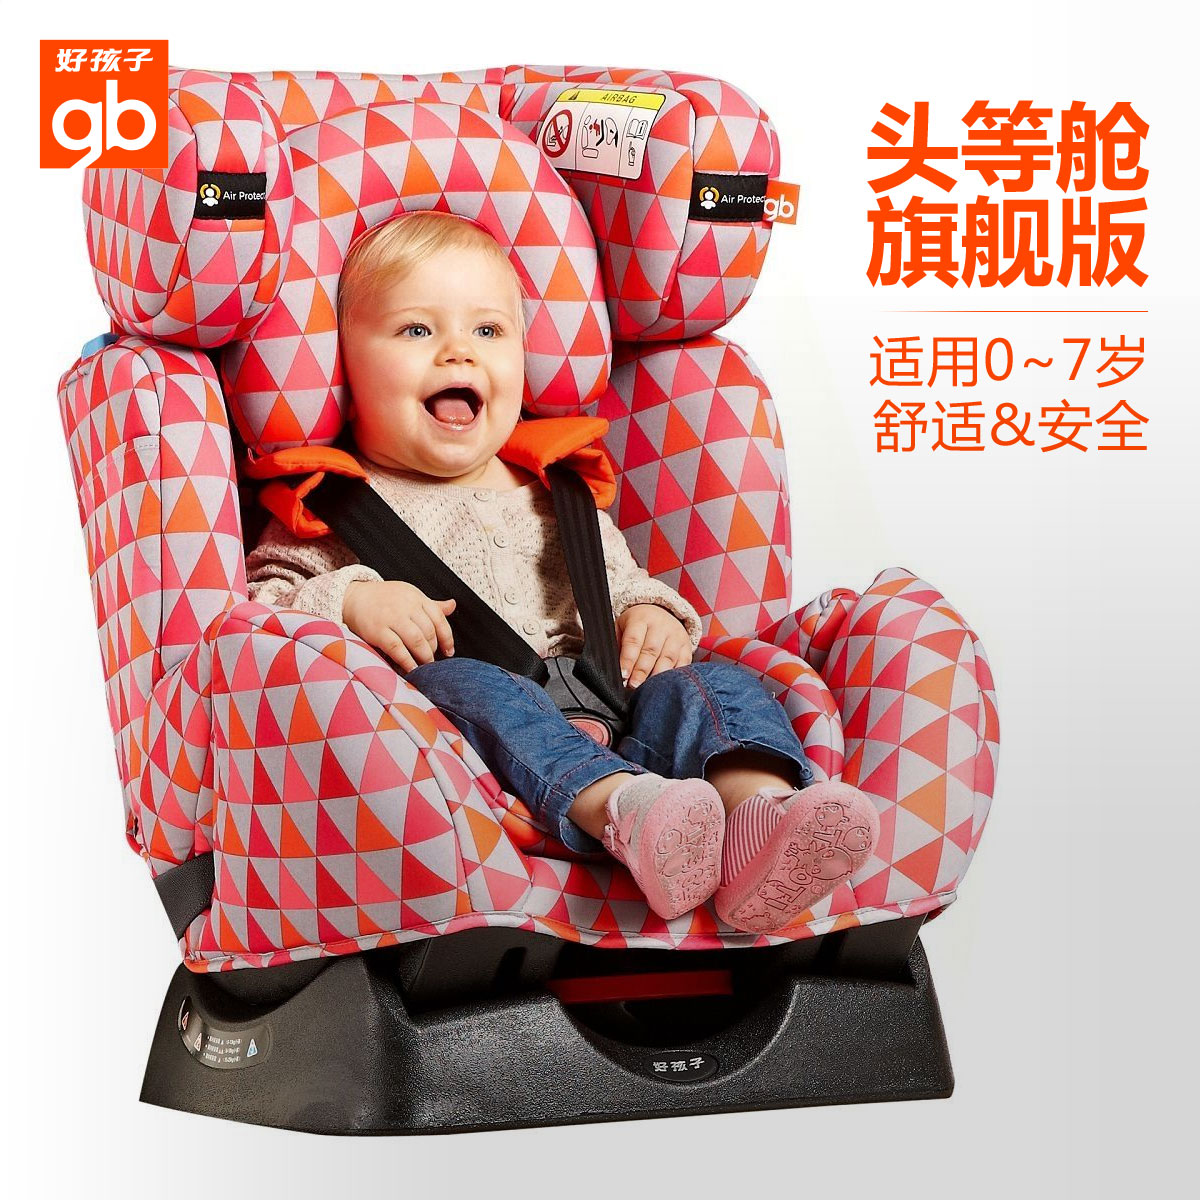 goodbaby好孩子儿童汽车安全座椅 头等舱旗舰版CS558 0-7岁